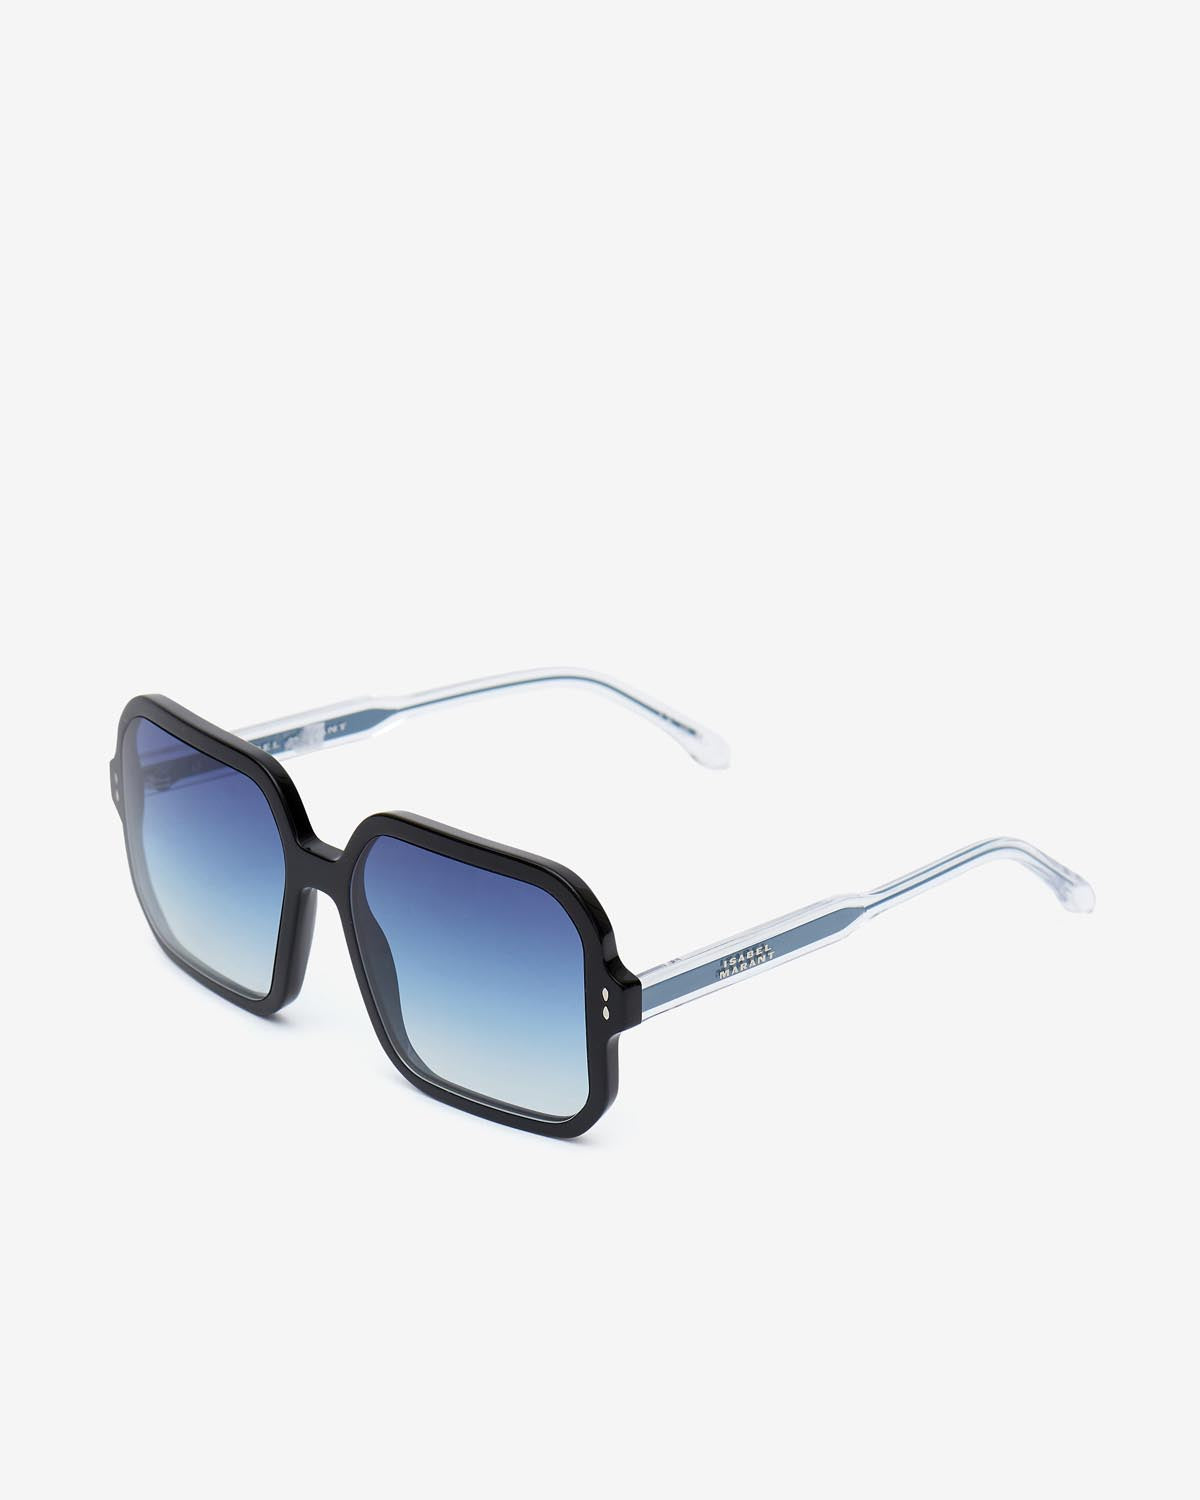 Livia sunglasses Woman Black-gray azure 1